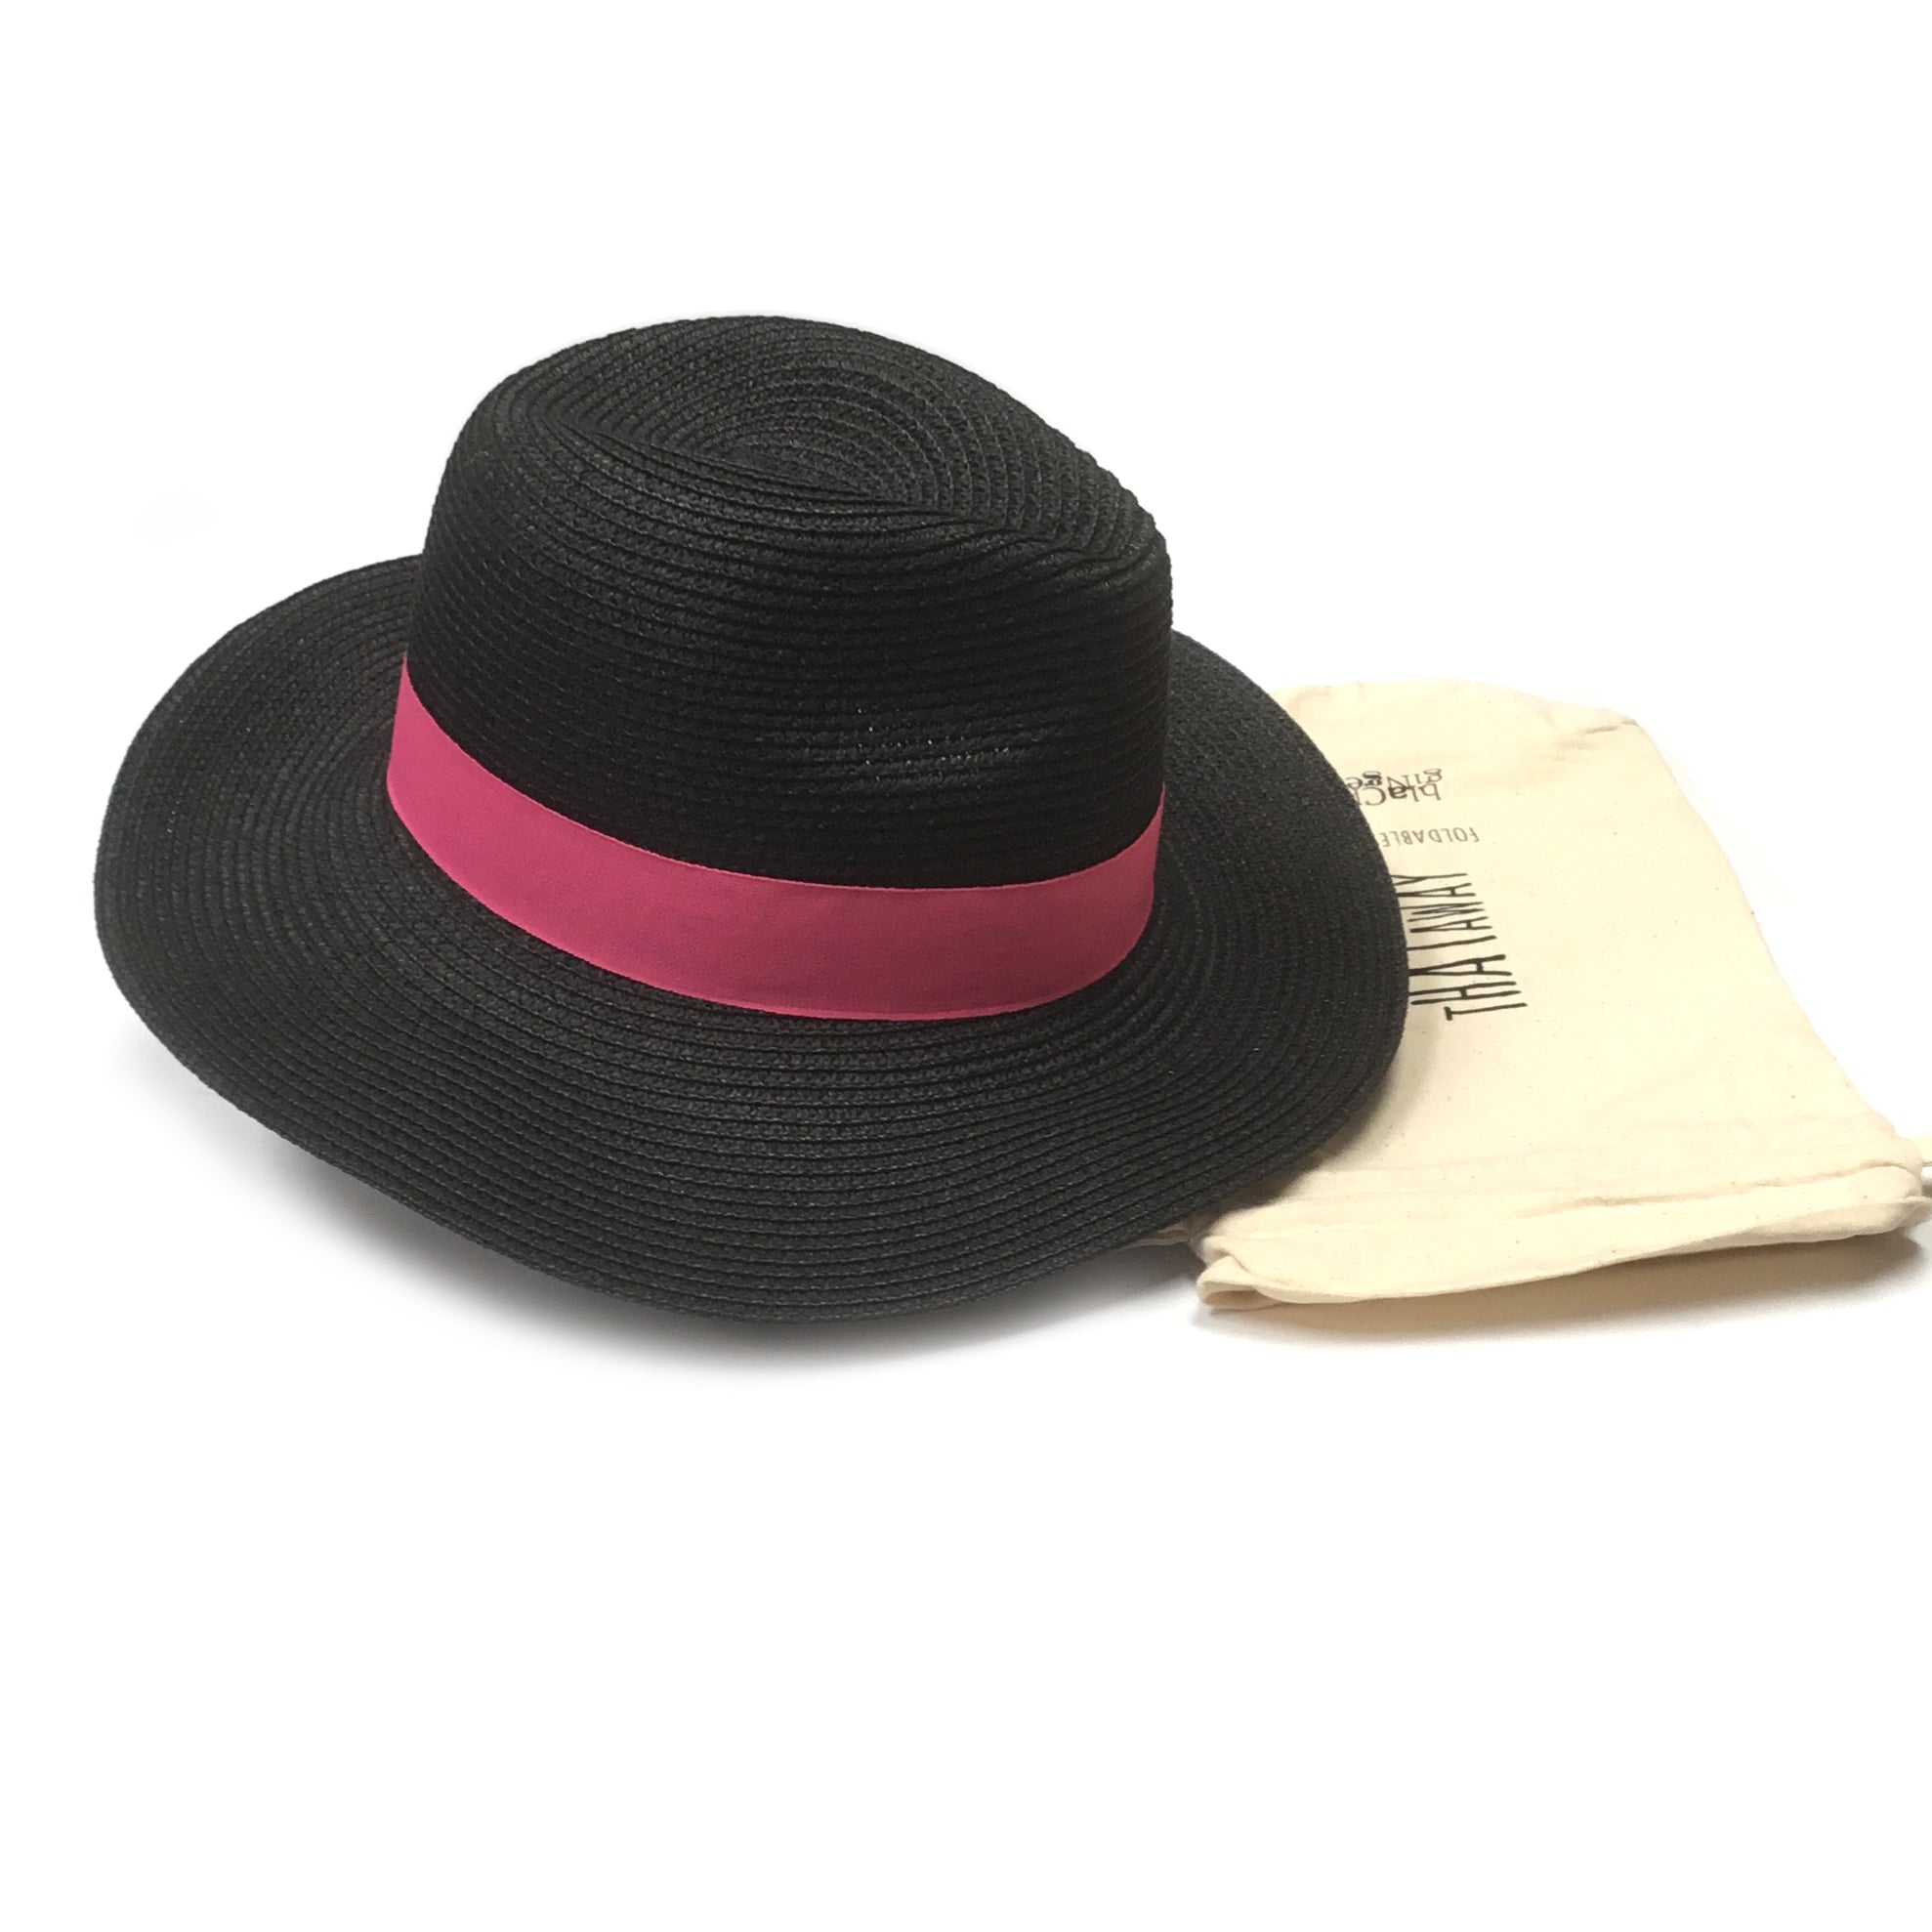 Folding Panama Style Travel Sun Hat - Black & Pink (57cm)